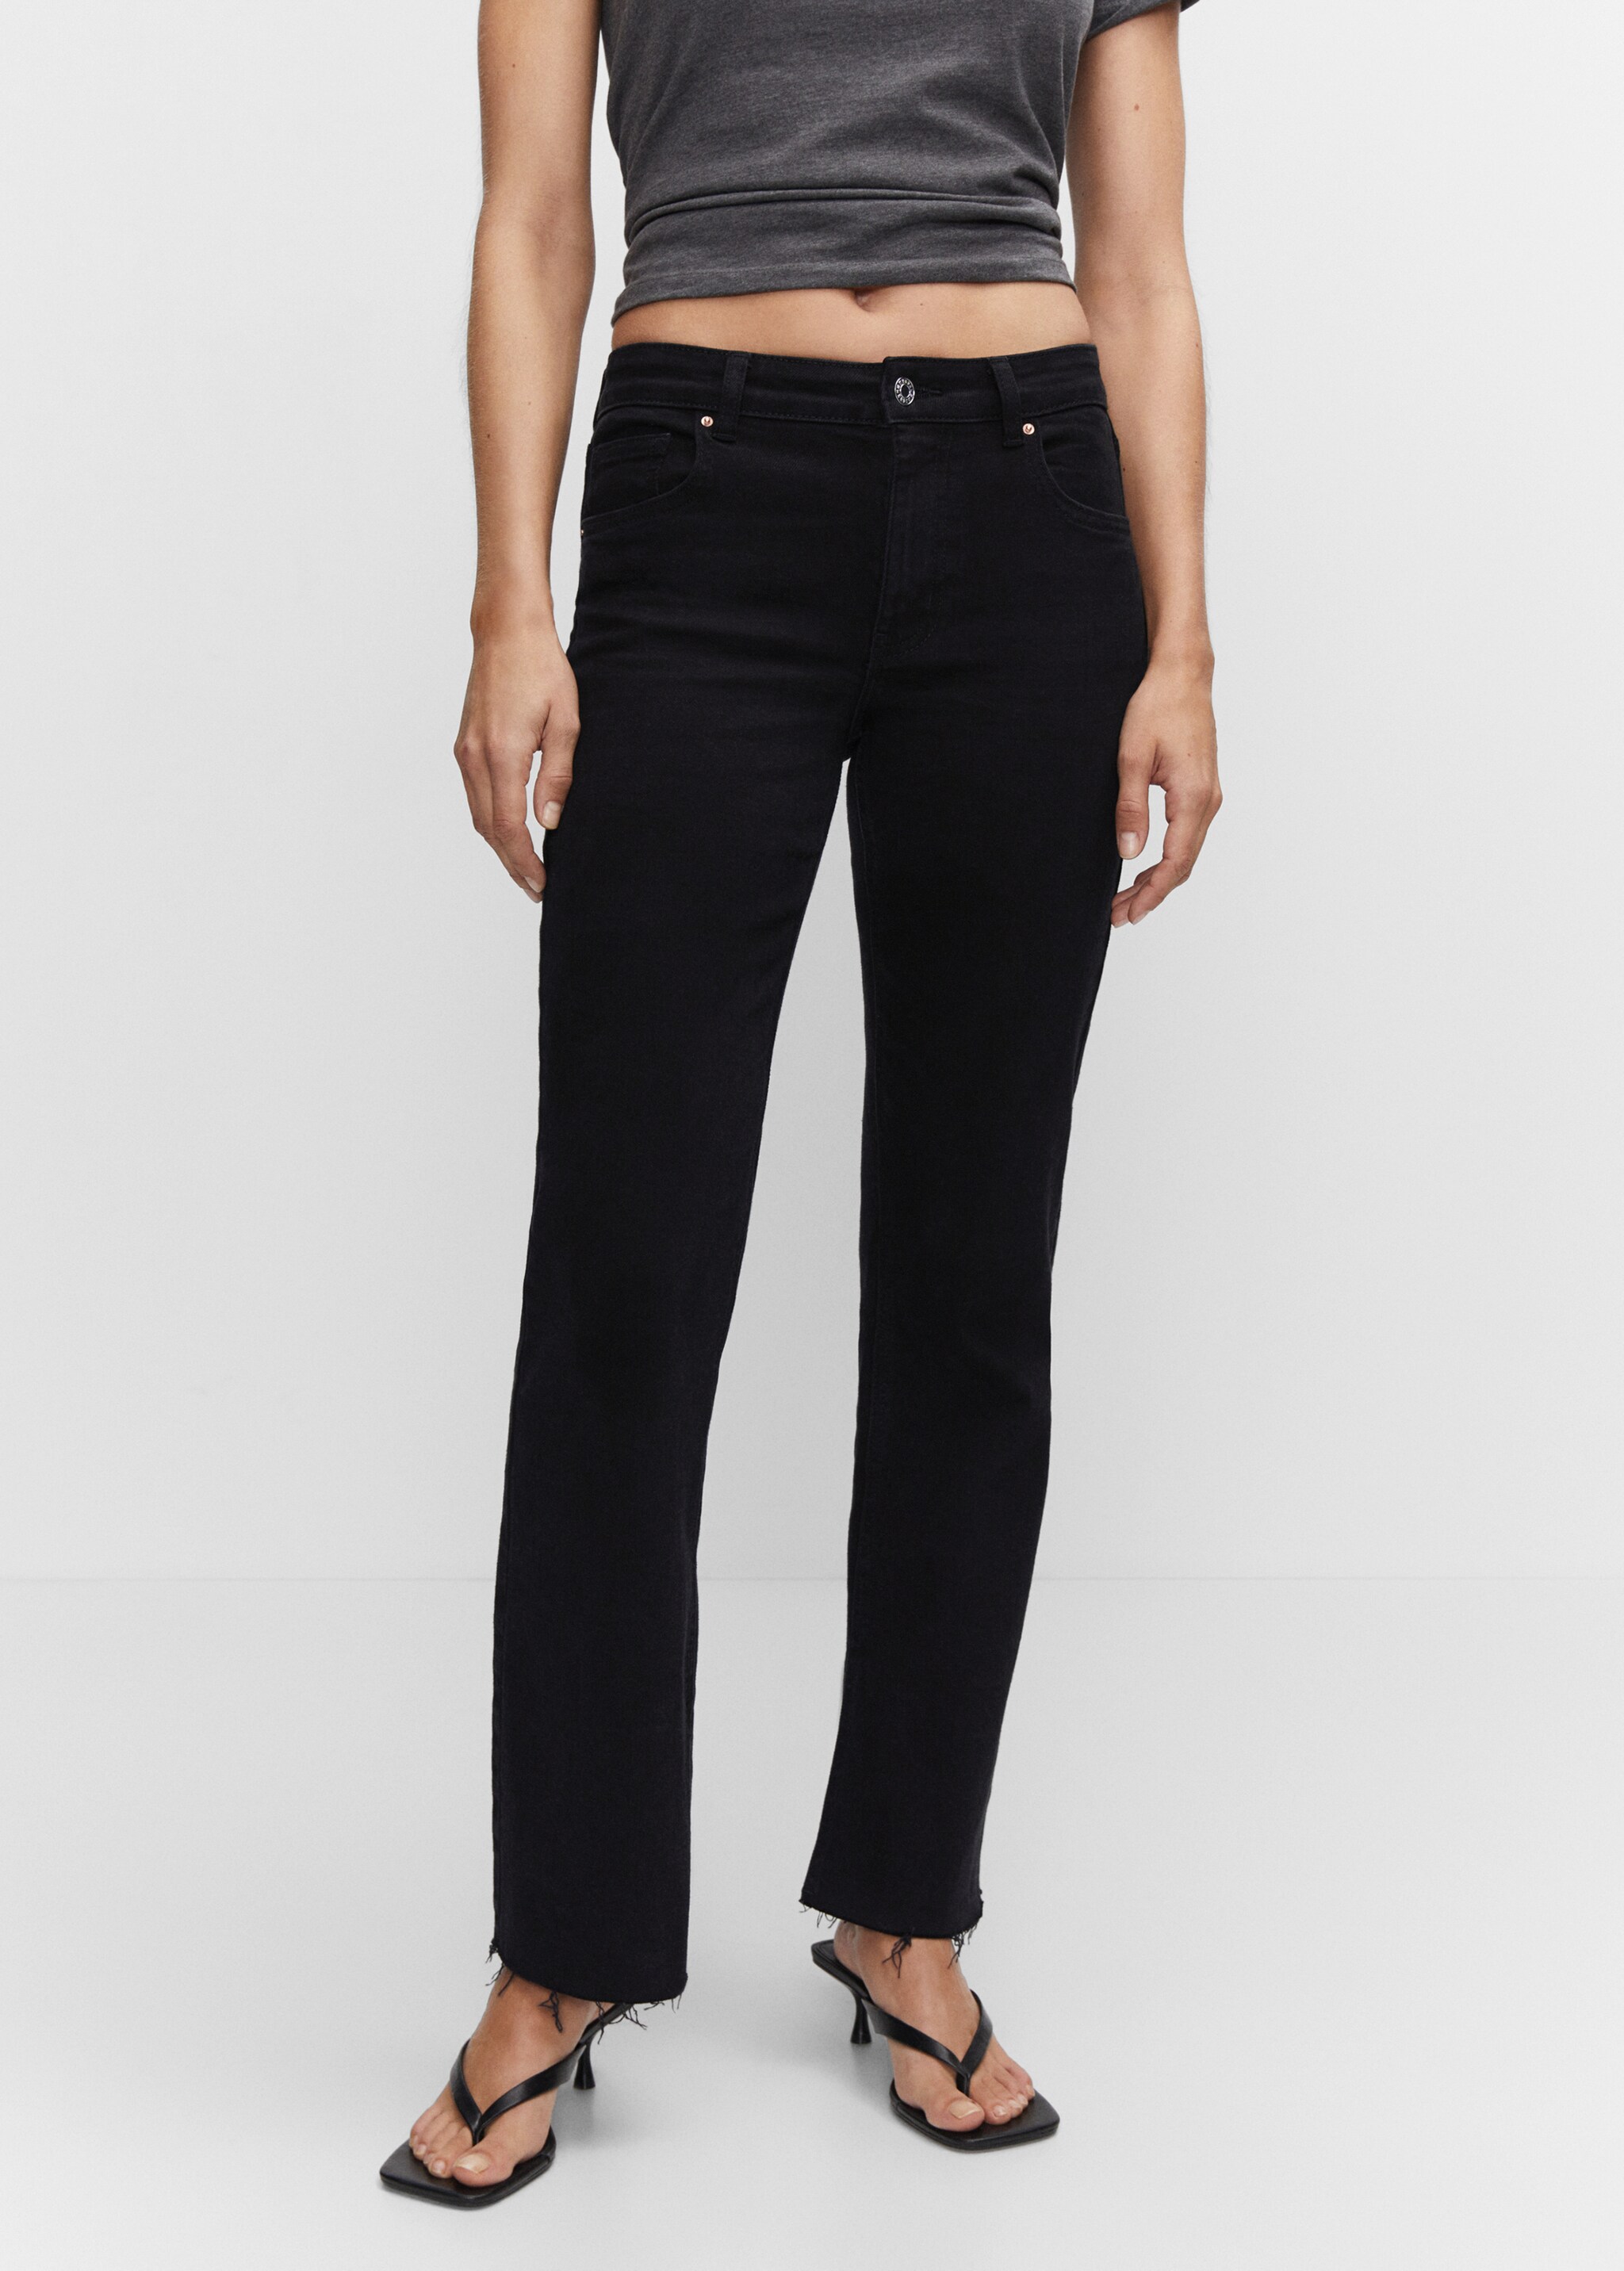 Medium-rise straight jeans with slits - Medium plane